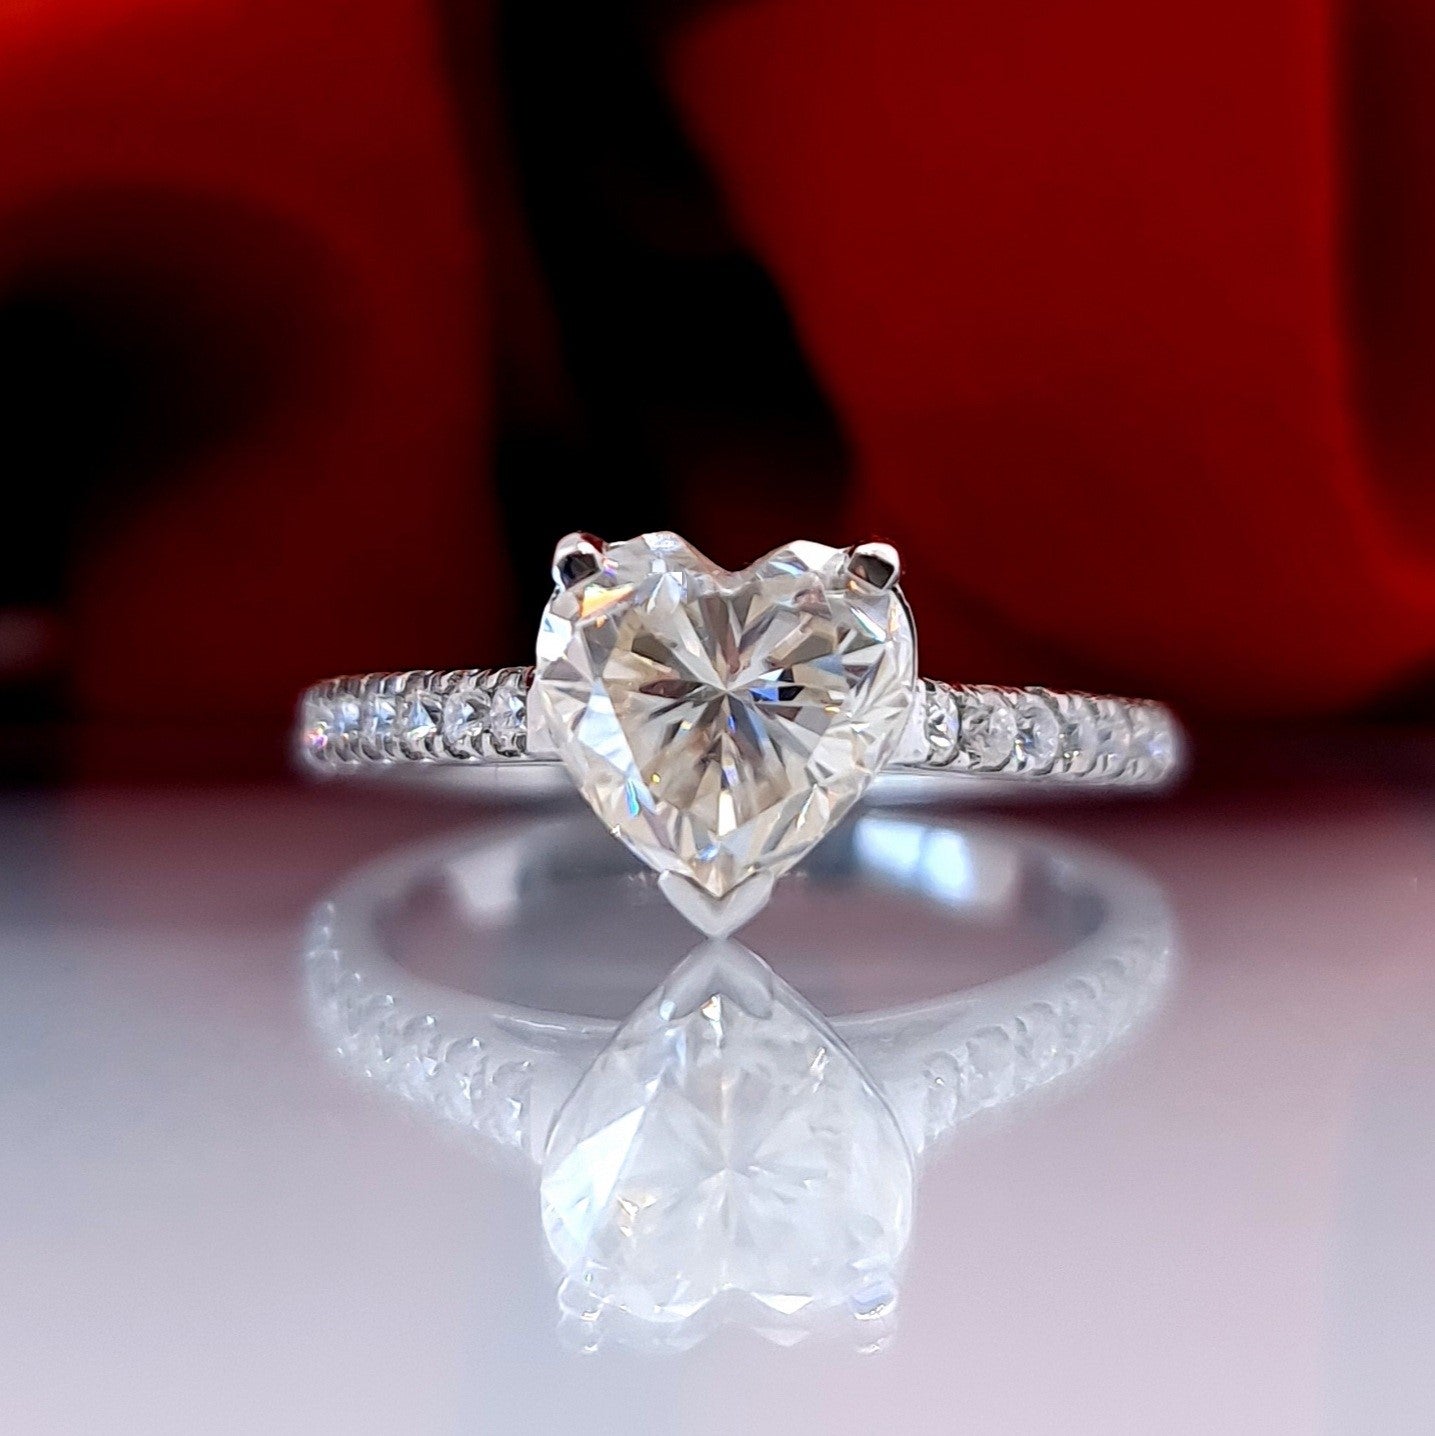 2 carat heart cut moissanite Fast next day shipping Sydney Australia Lifetime warranty diamond alternative sustainable engagement ring